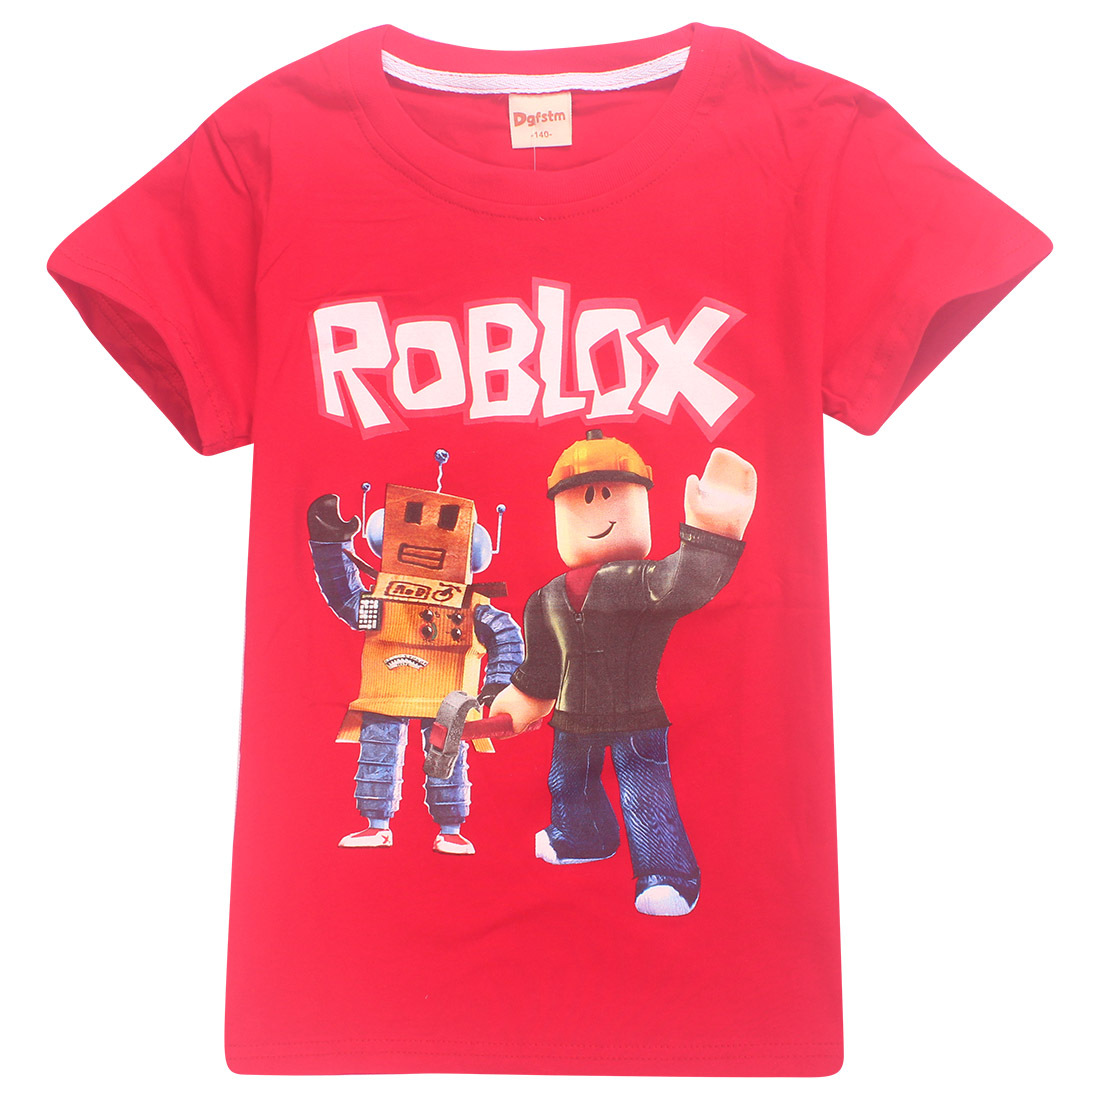 Roblox T Shirts For Kids Eyegemix Com - baby yoda roblox t shirt